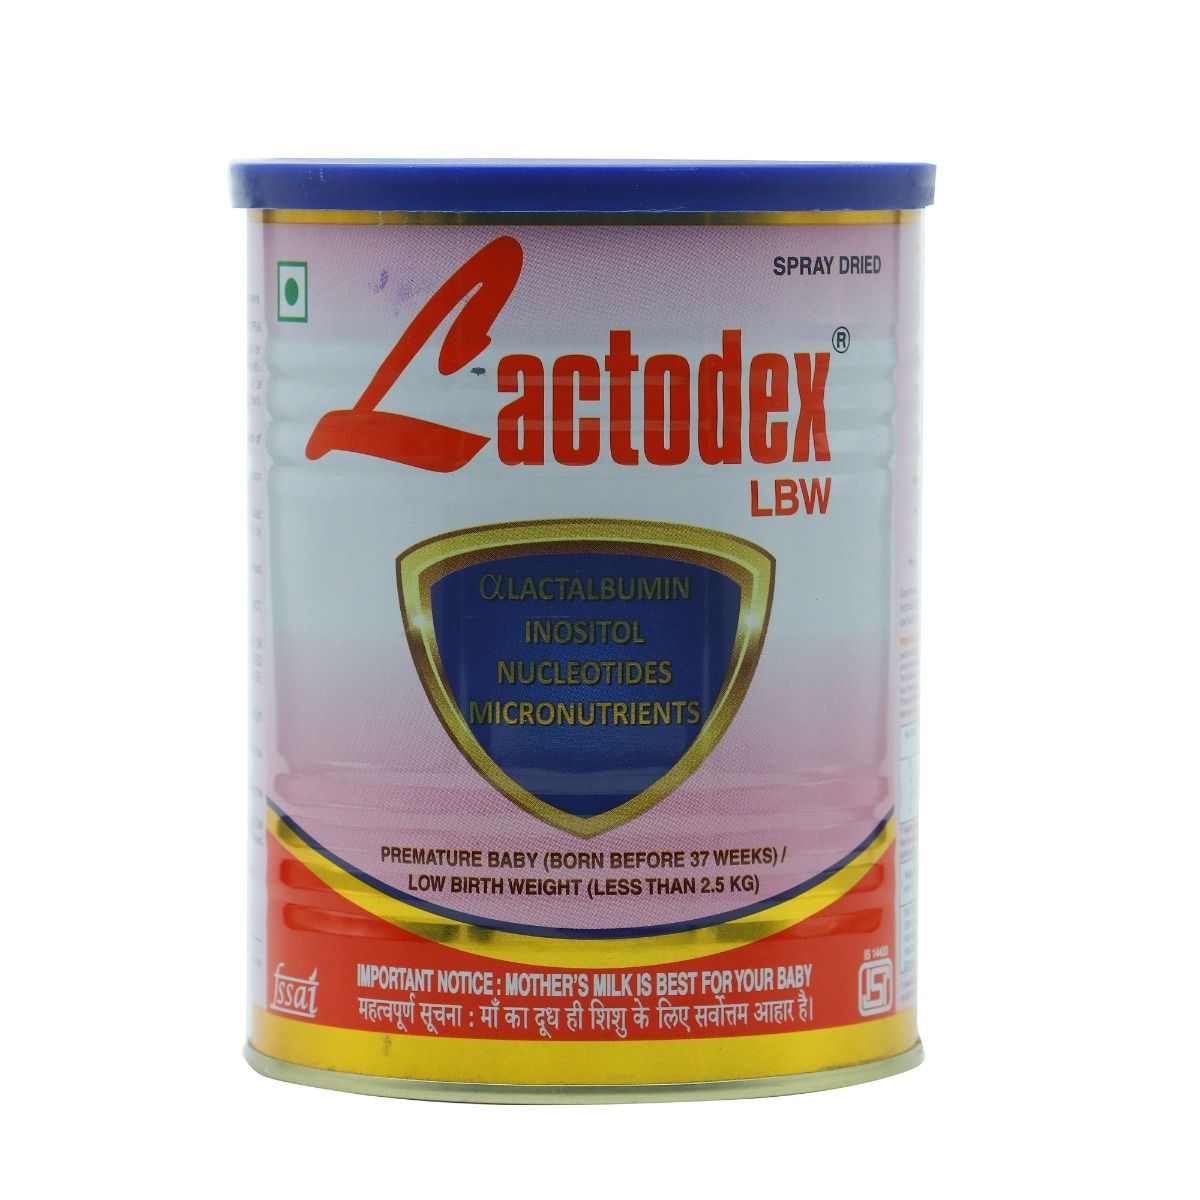 Lactodex-LBW Infant Formula, 400 gm Tin, Pack of 1 